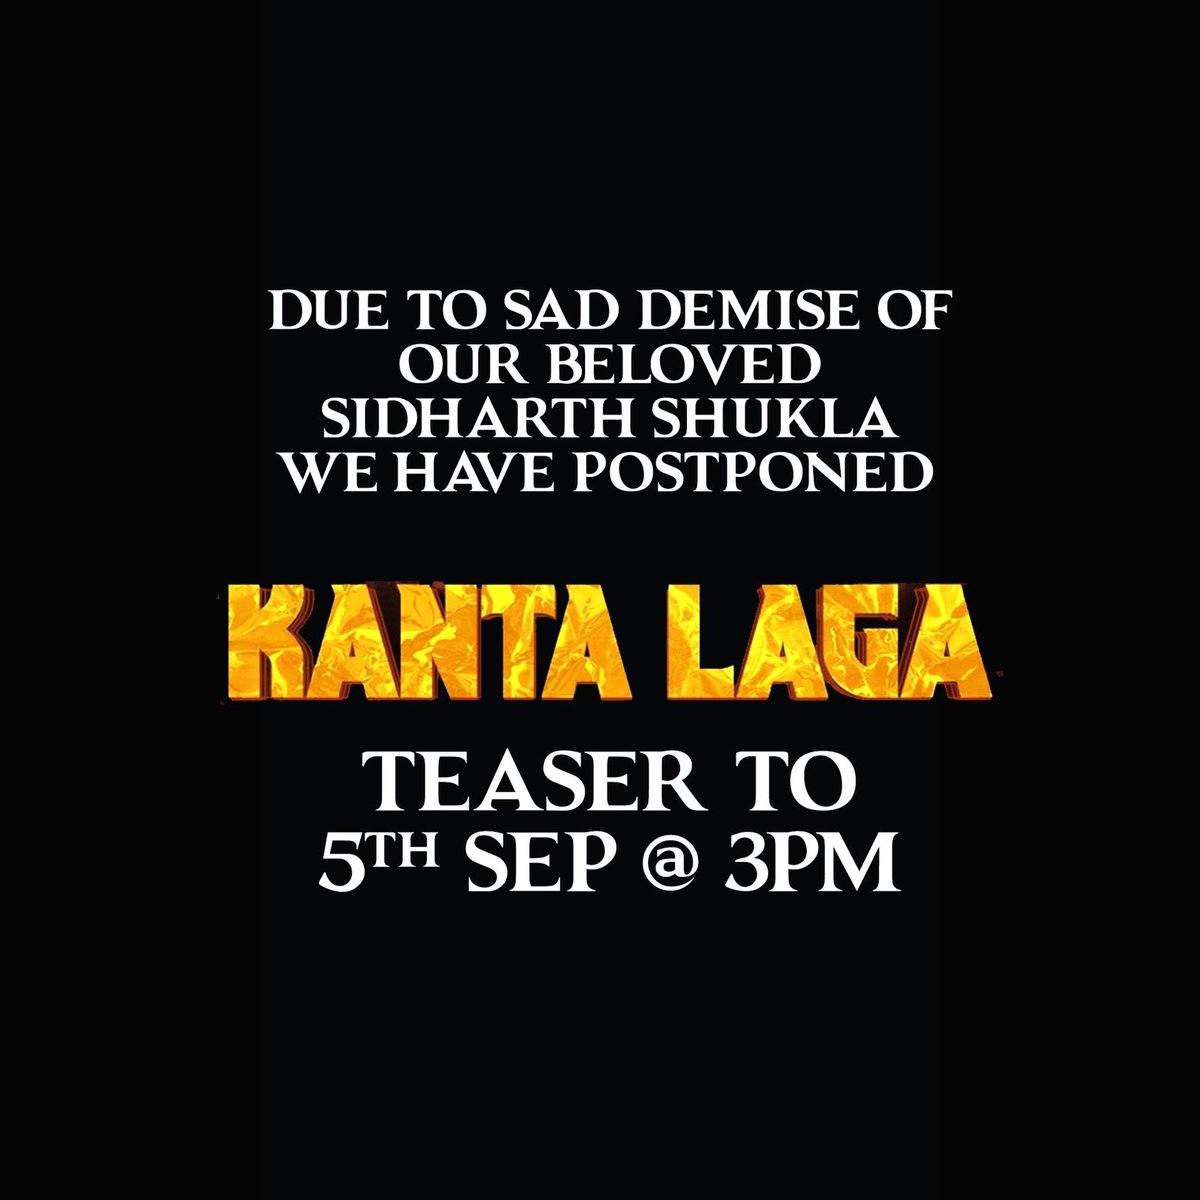 Due to sad demise of our beloved Sidharth Shukla ,We have postponed #KantaLaga teaser to 5th September at 3pm.